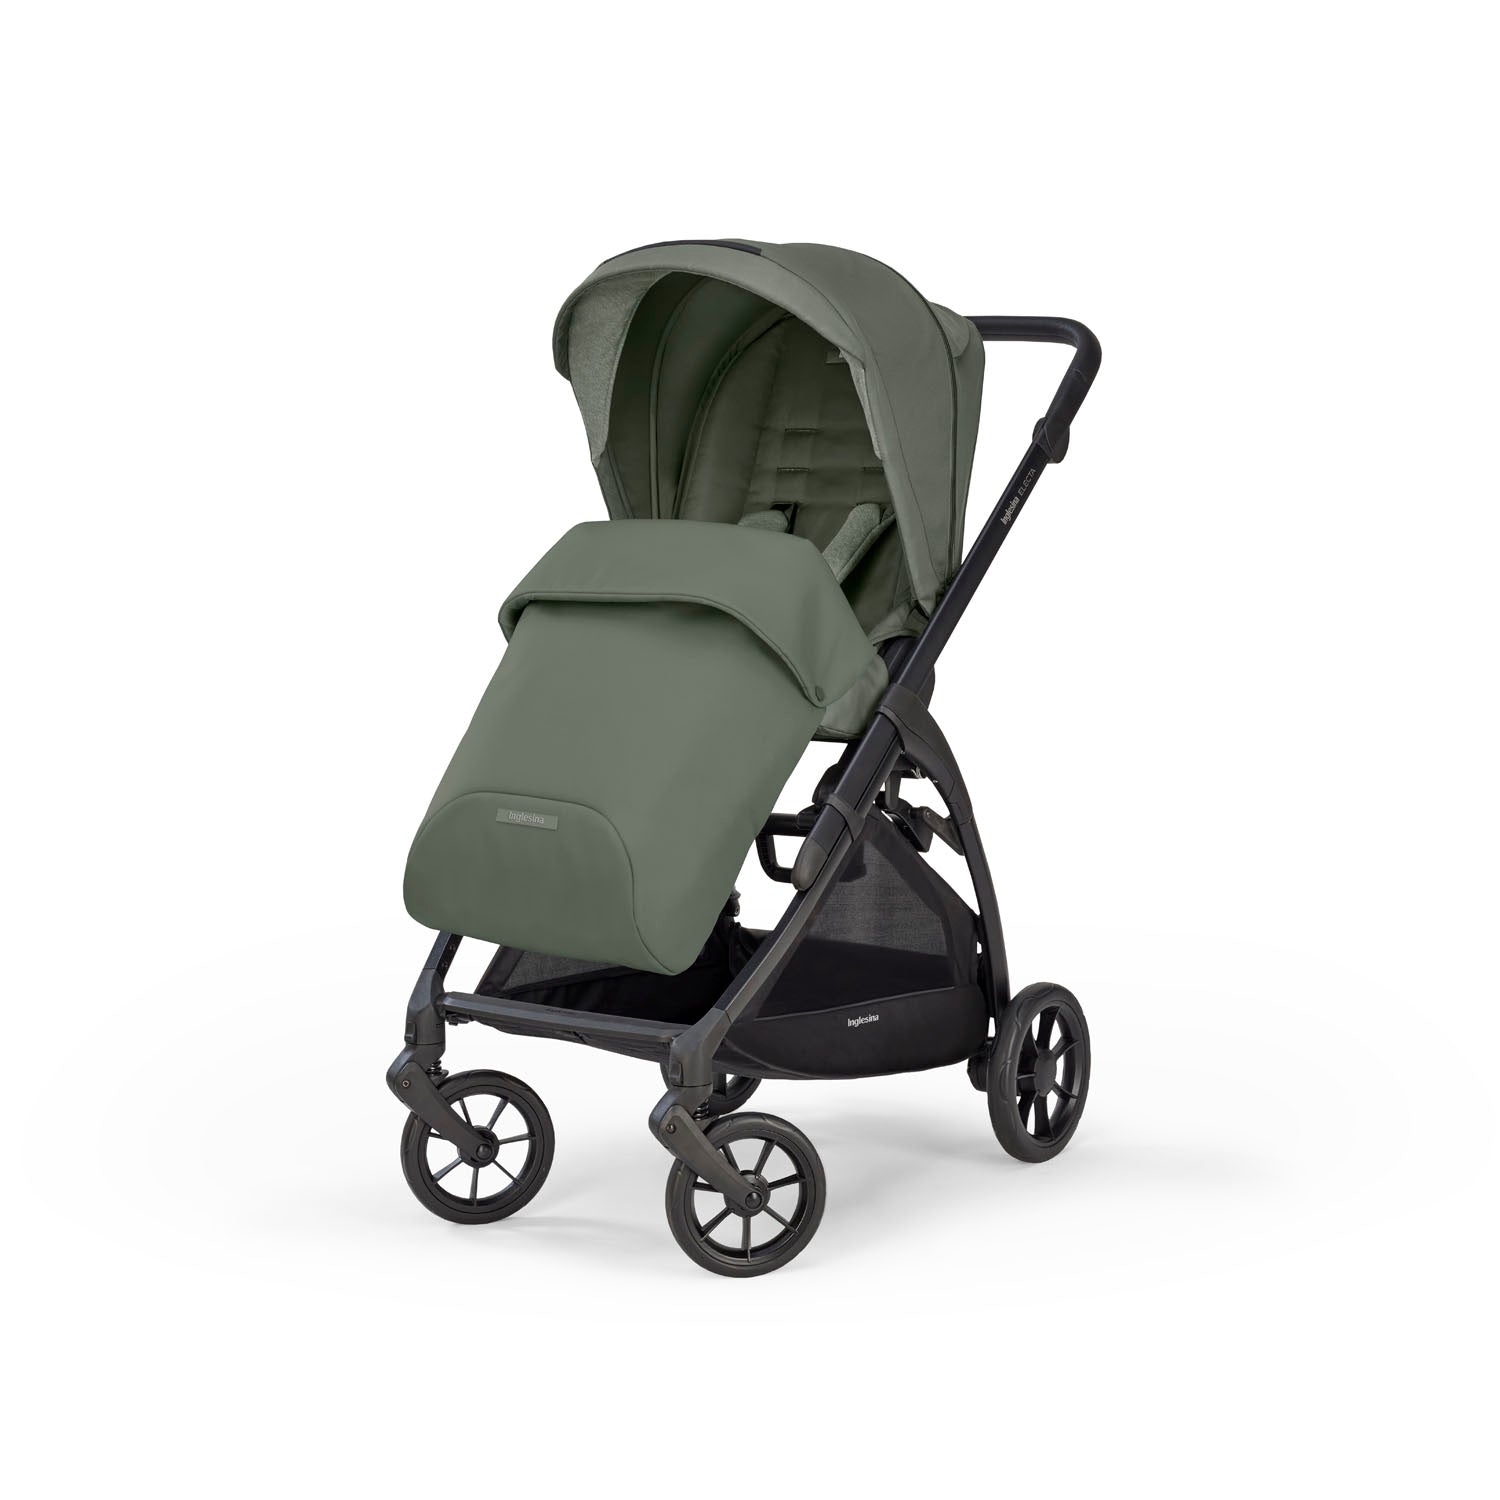 Inglesina Aptica Stroller with Darwin Car Seat & Base - Travel System